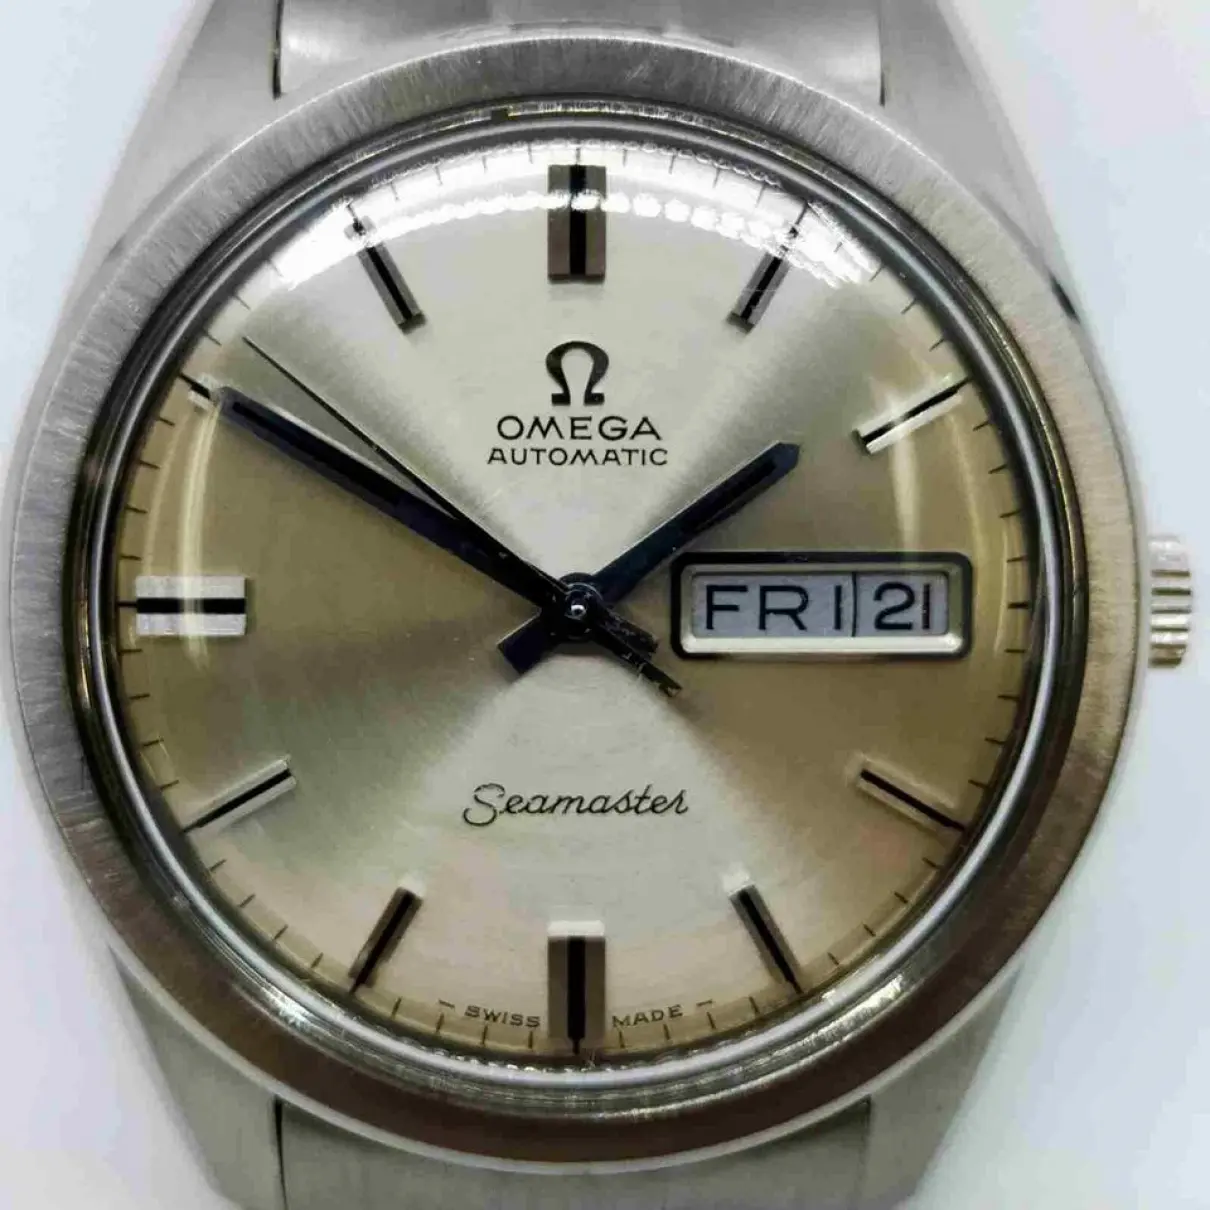 Seamaster watch Omega - Vintage